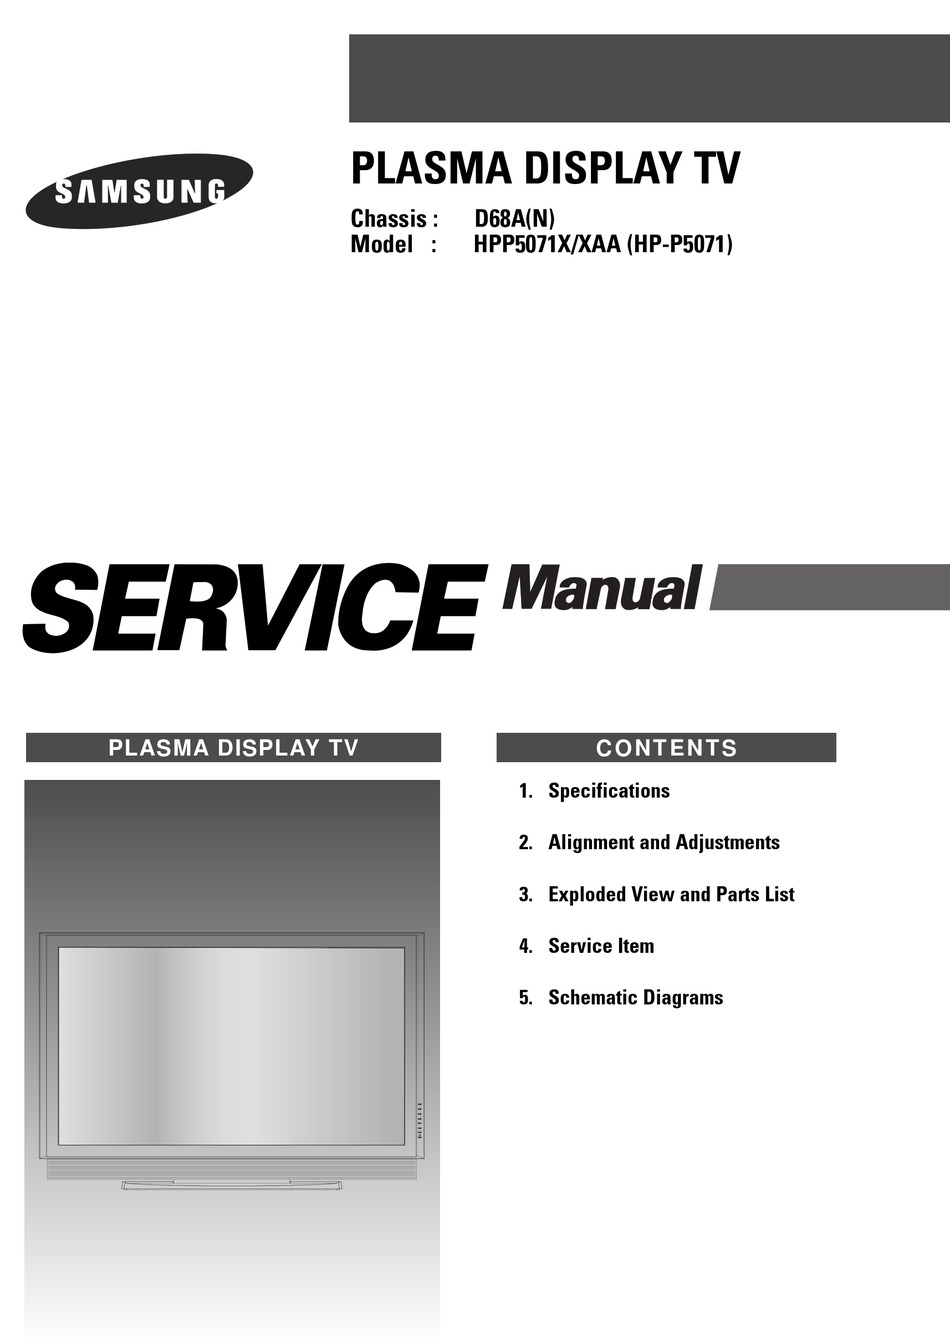 SAMSUNG HPP5071X/XAA SERVICE MANUAL Pdf Download | ManualsLib